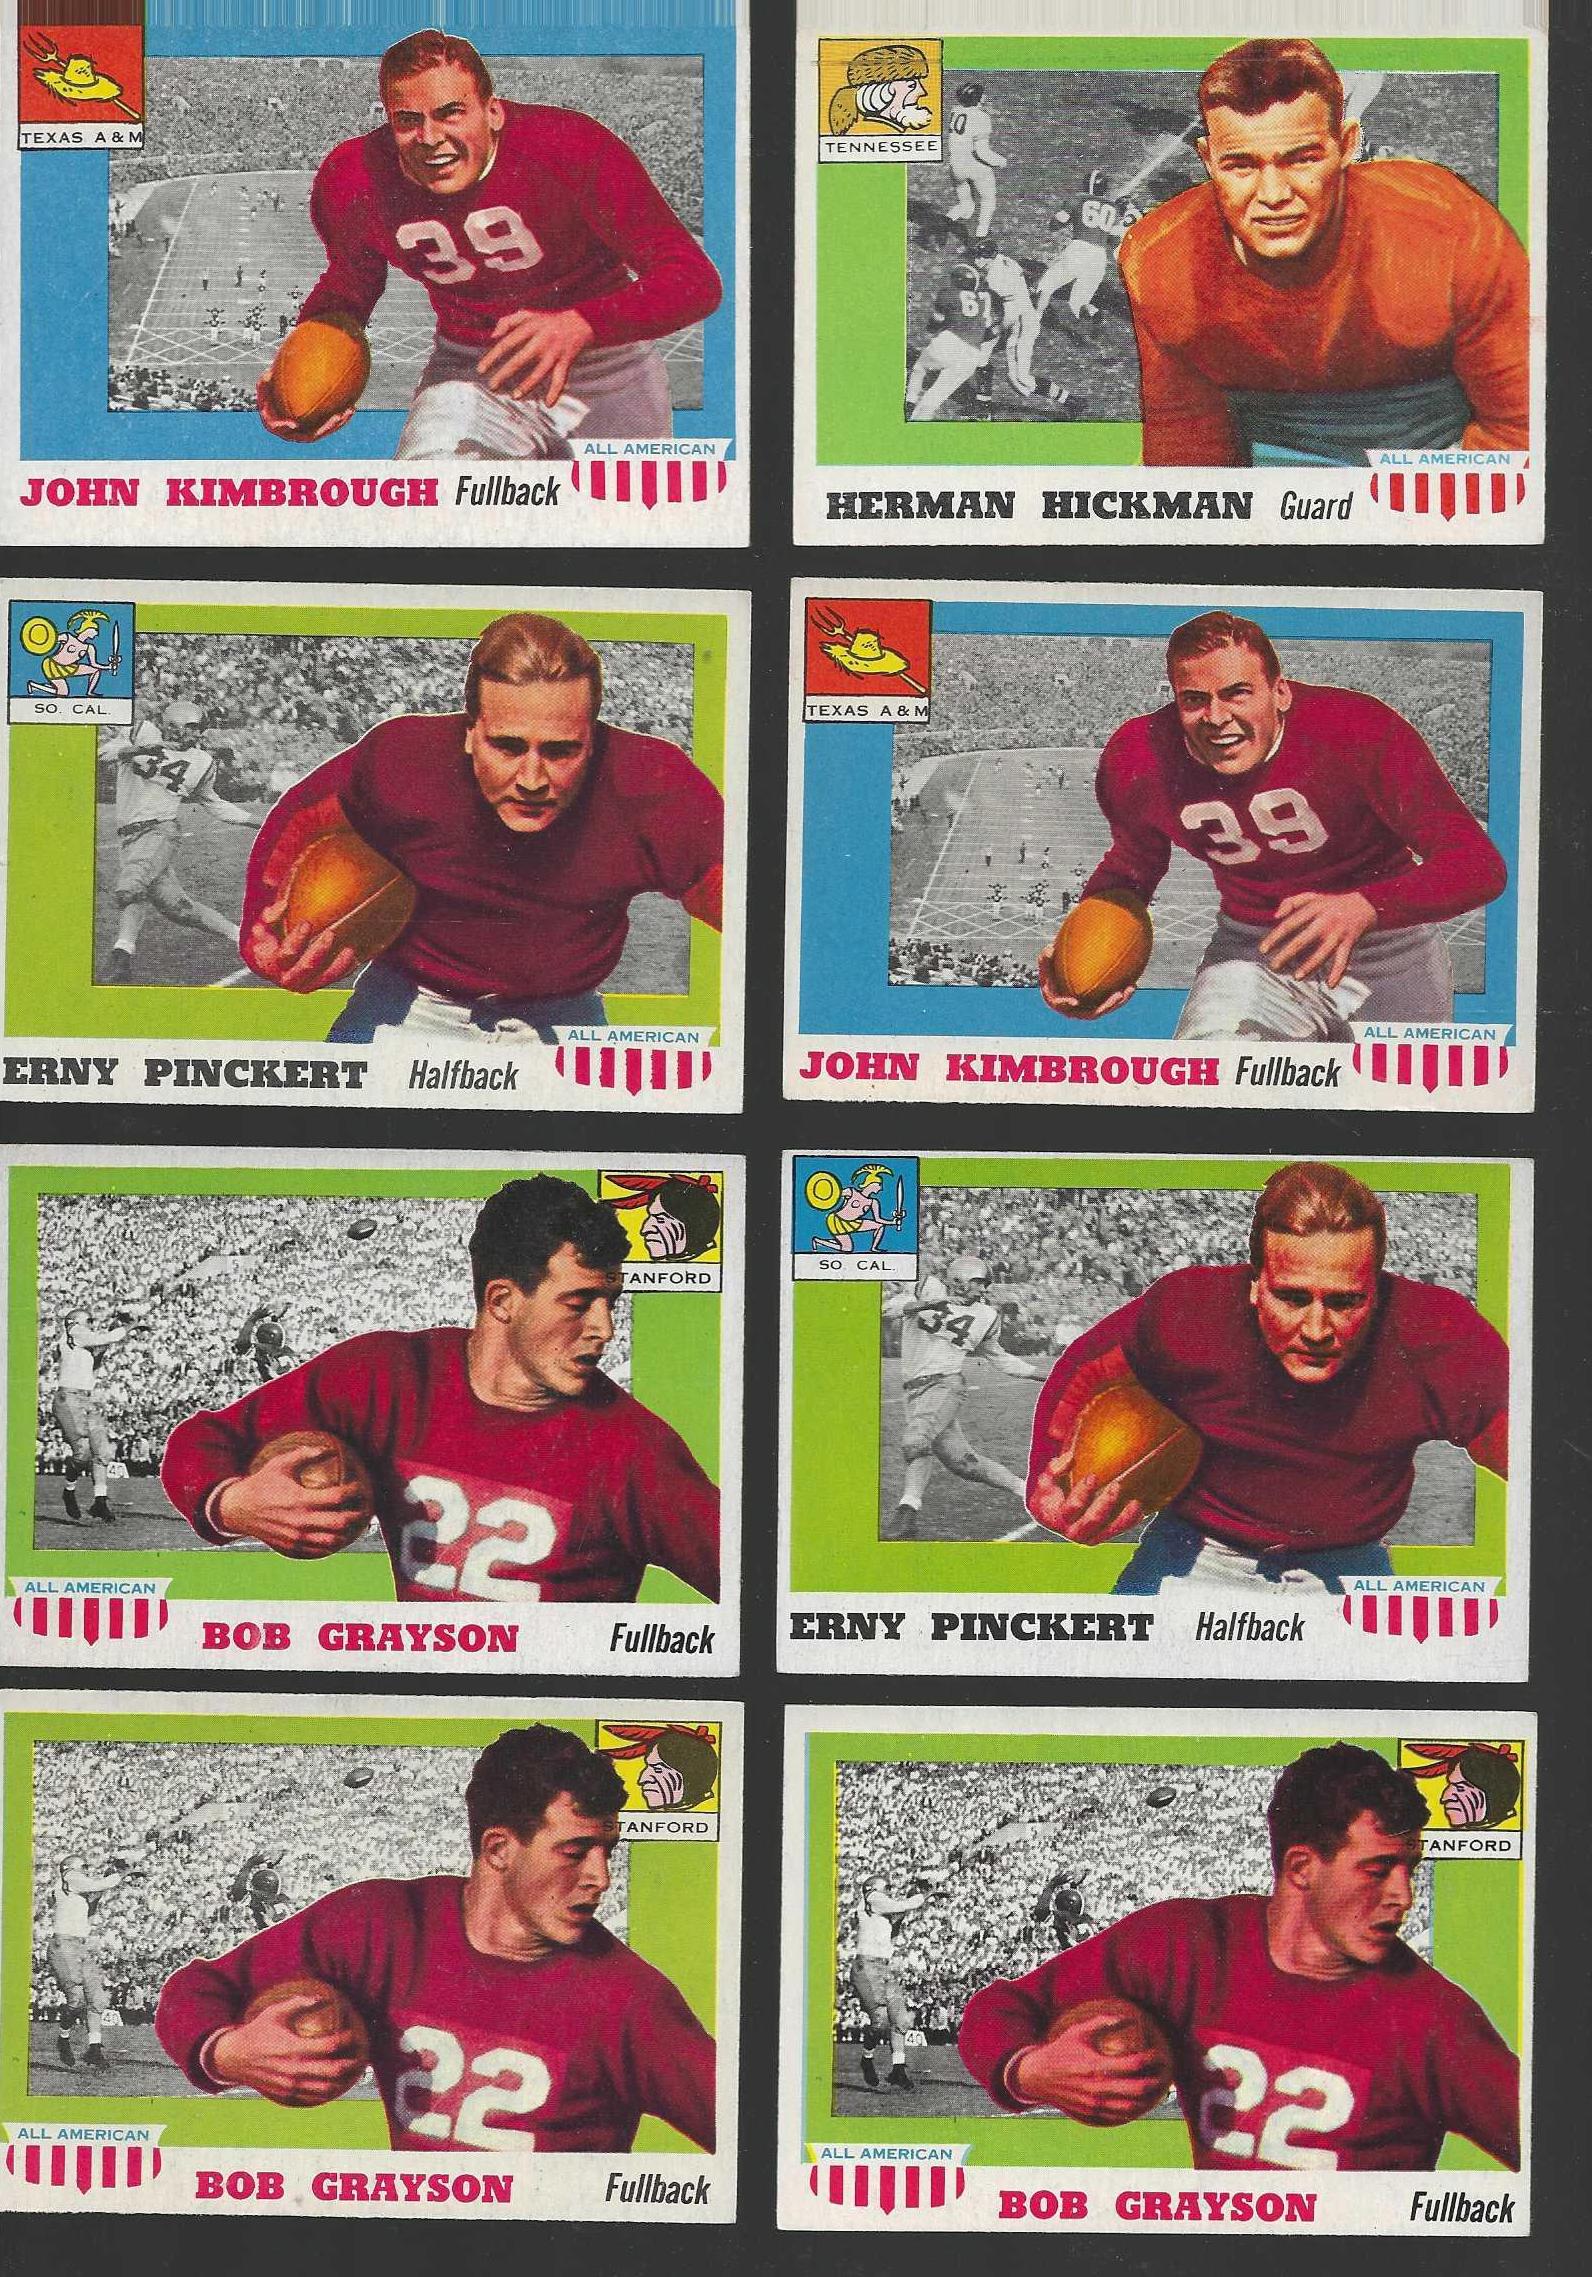 1955 Topps ALL-AMERICAN FB #  2 John Kimbrough (Texas A.M.) Football cards value